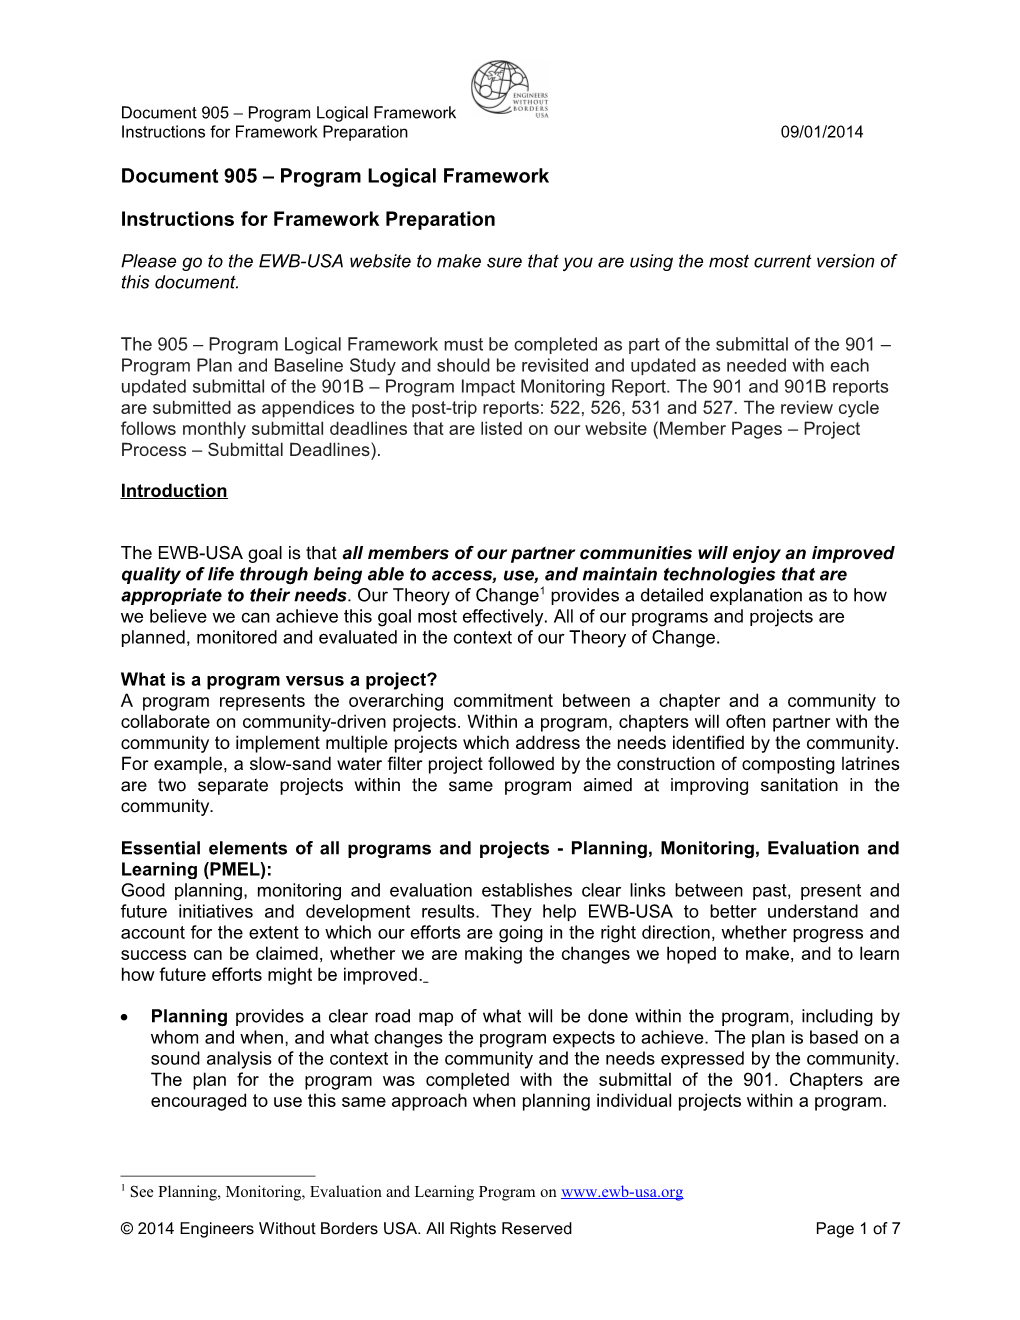 Document 905 Program Logical Framework